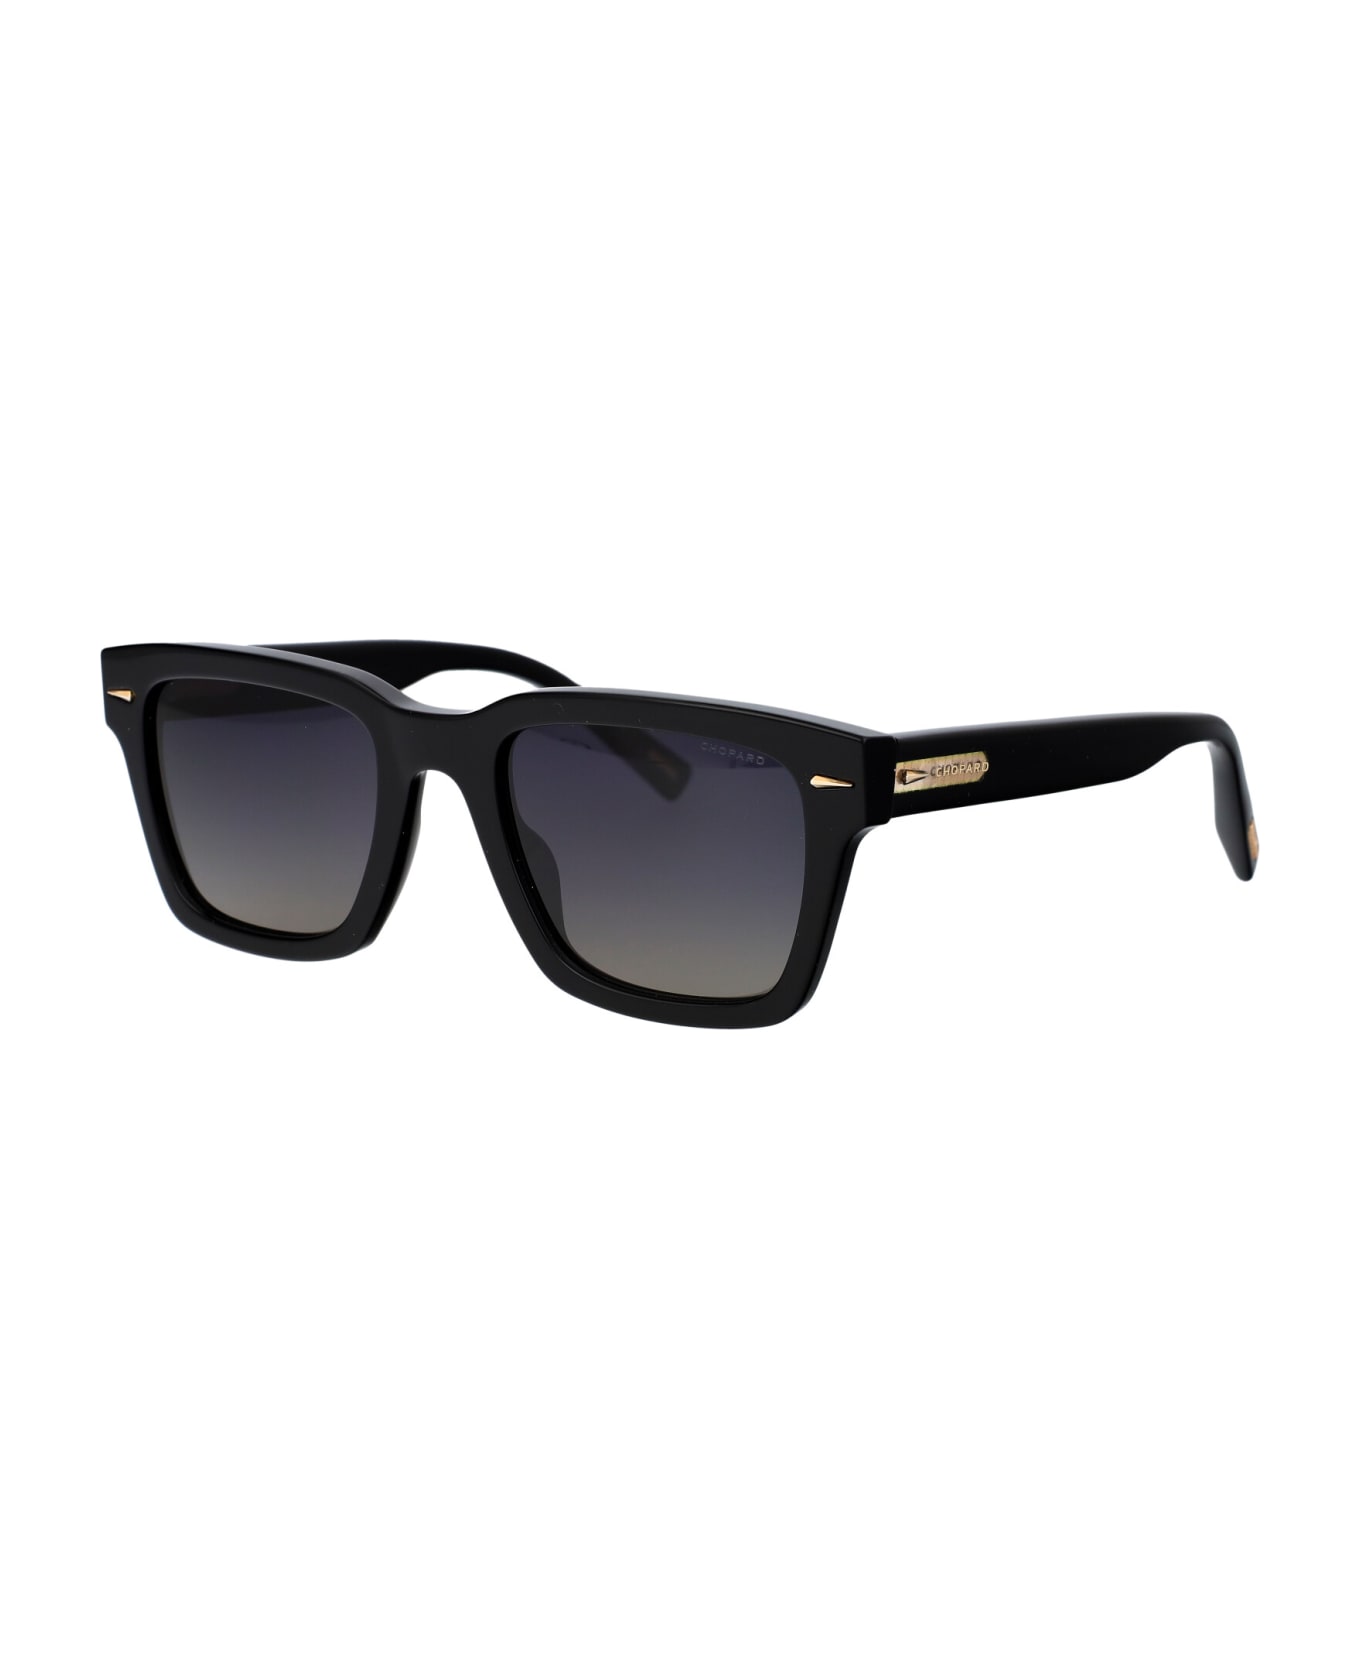 Chopard Sch337 Sunglasses - 700Z BLACK サングラス